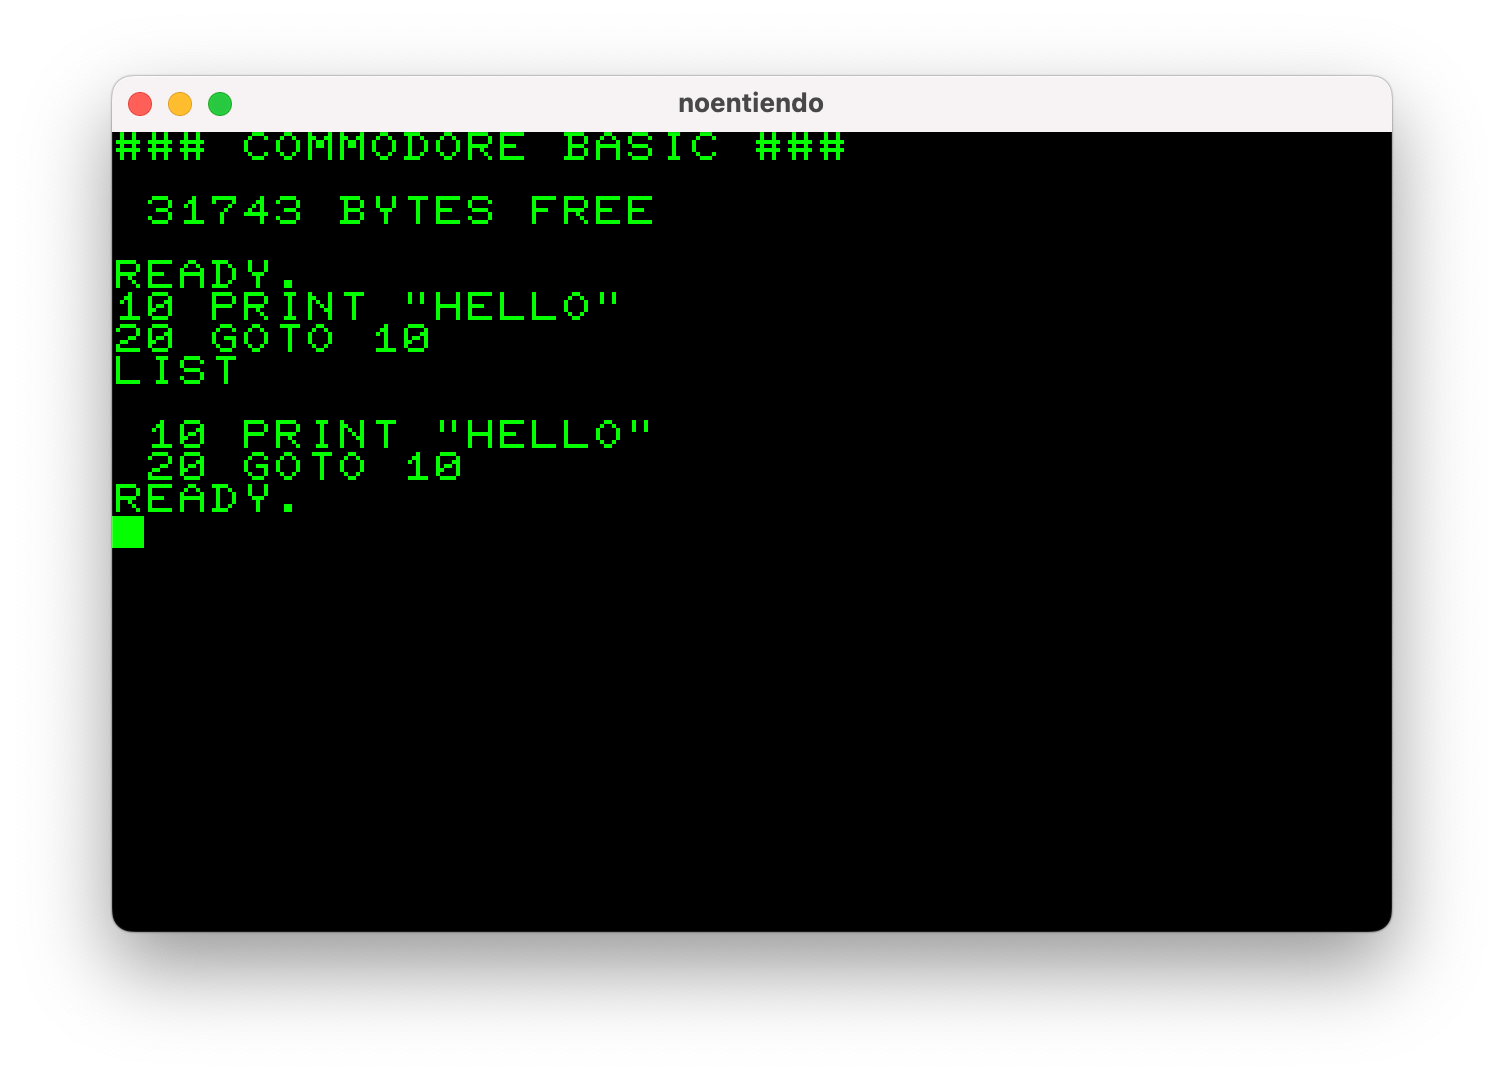 A screenshot of a Commodore PET running BASIC.